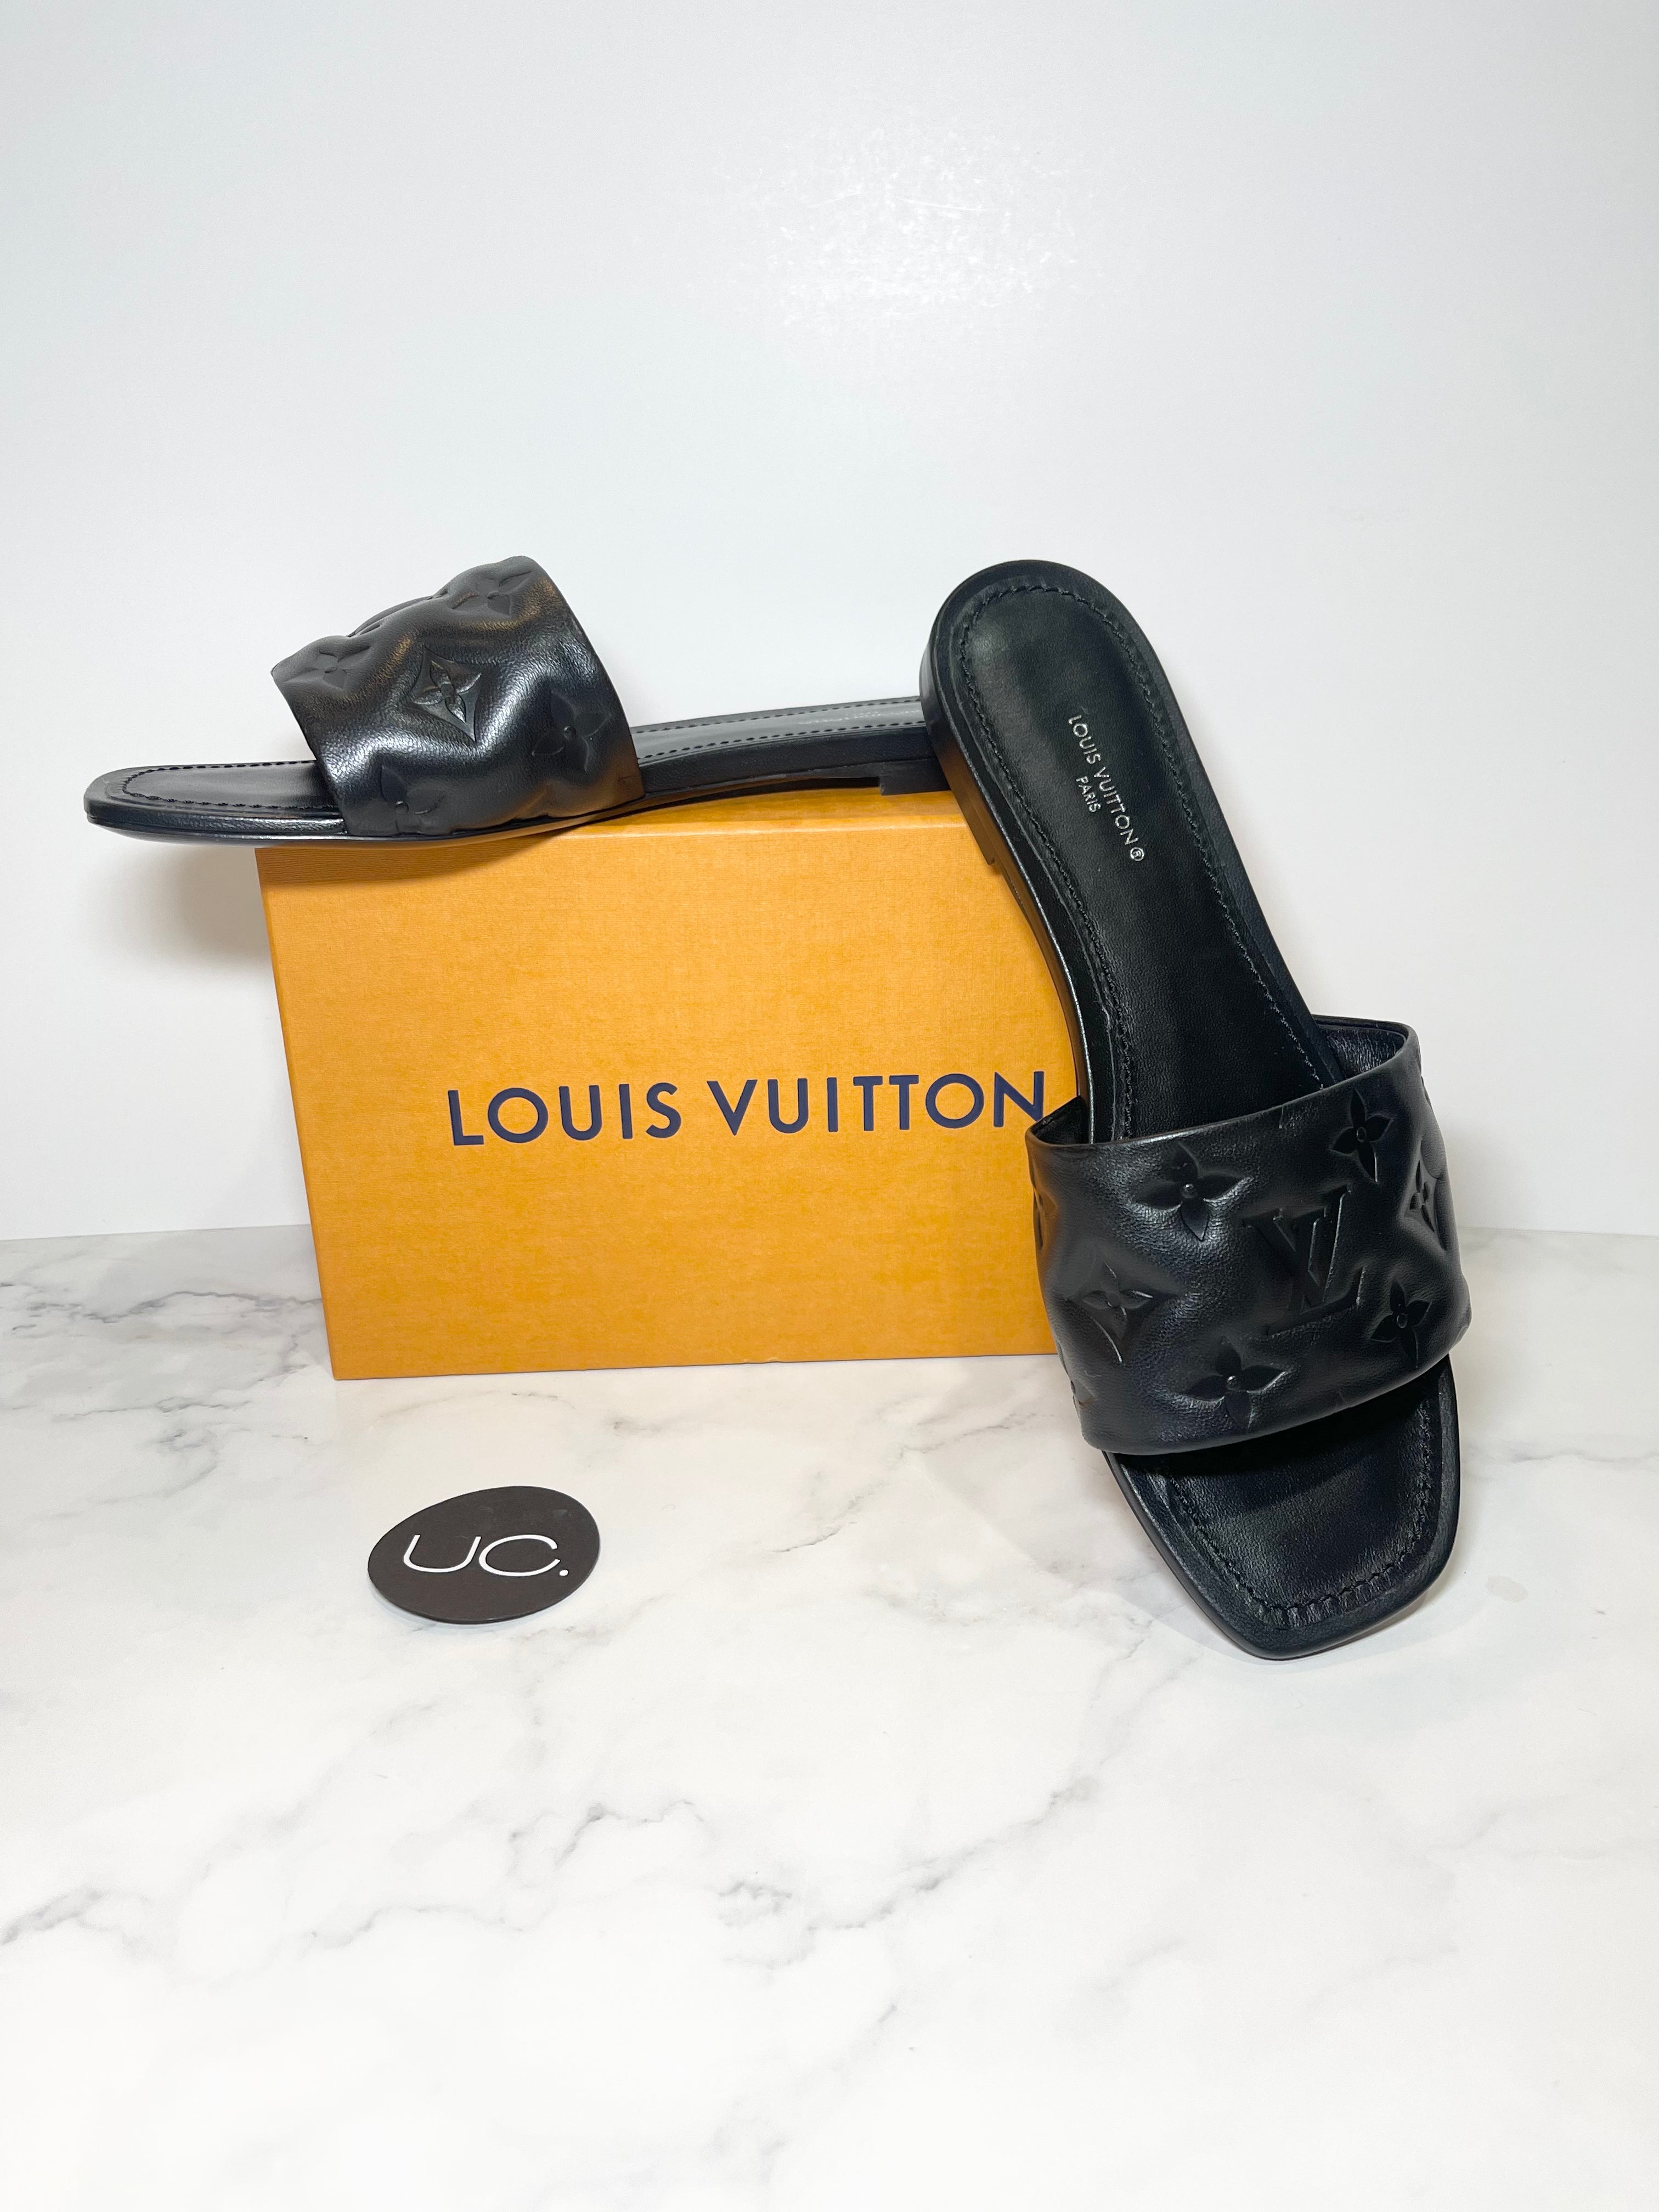 Louis Vuitton Revival White Flat Mules New